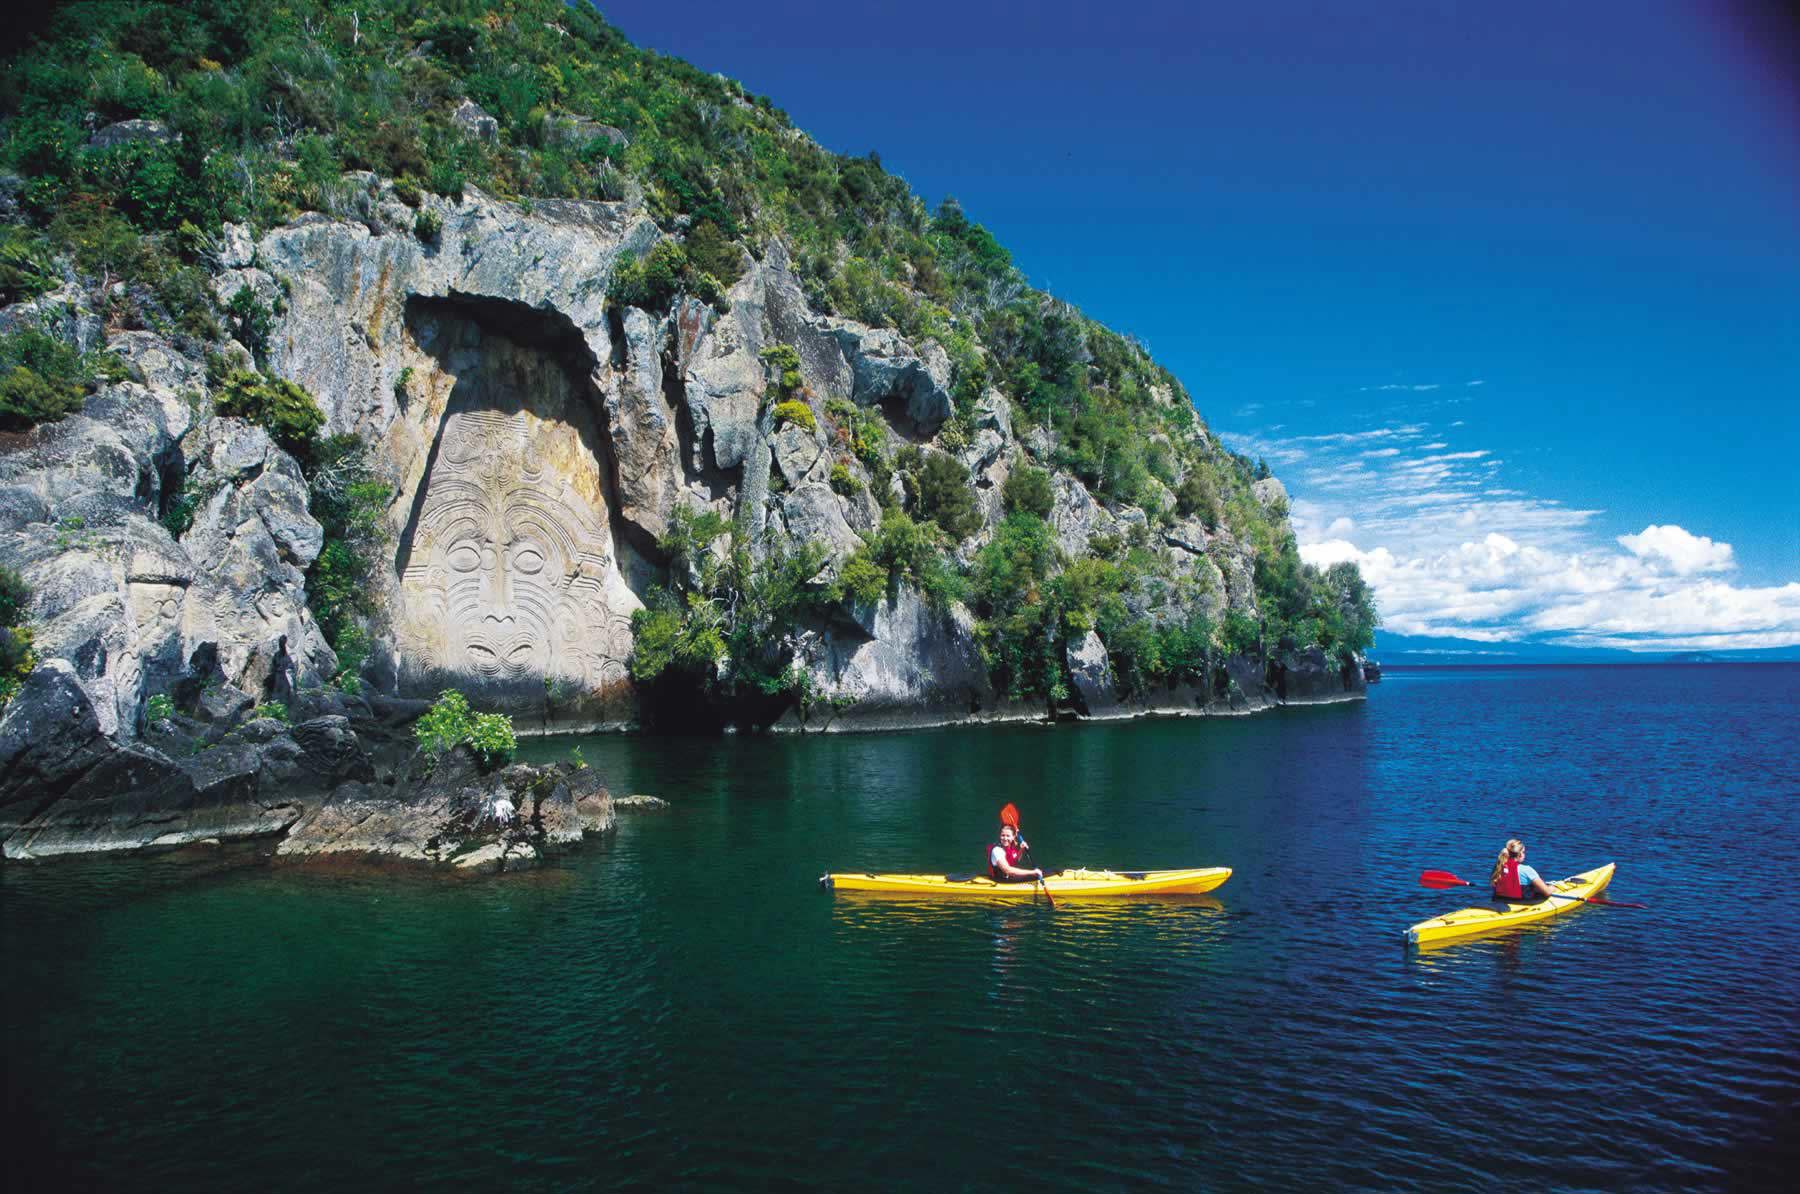 Maori Rock Carvings And Kayaking